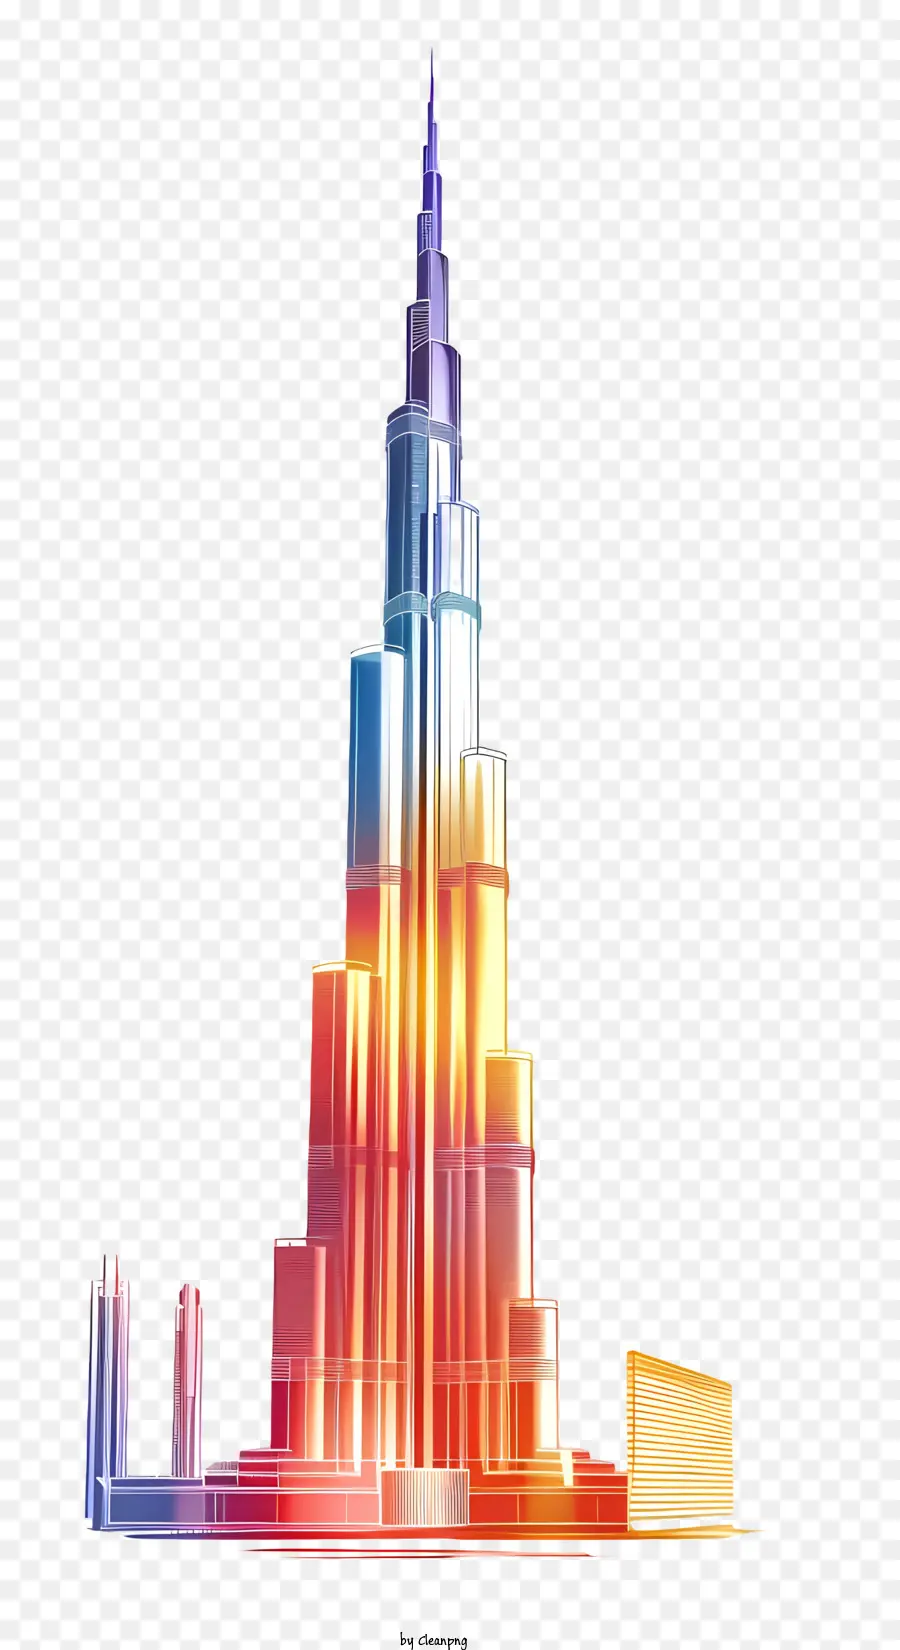 burj khalifa burj khalifa tallest building in the world metal structure clock on top